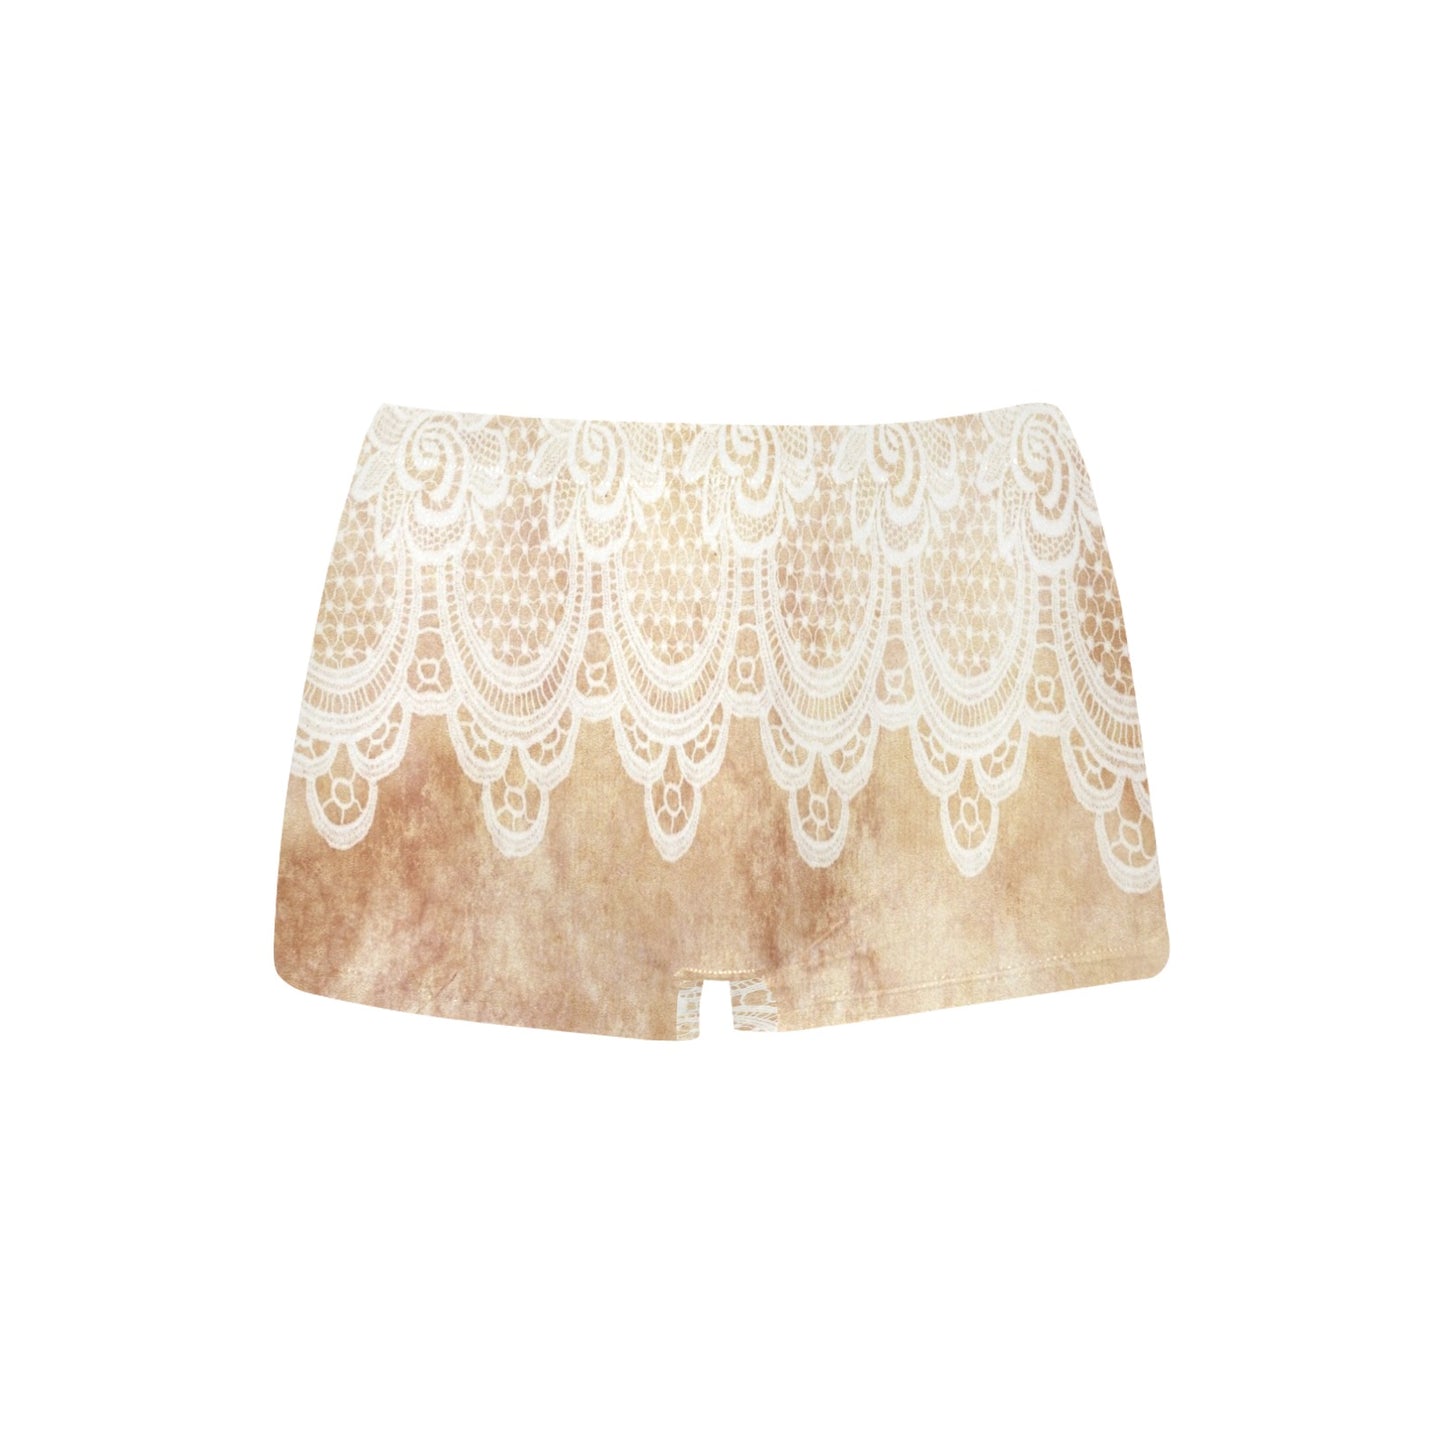 Printed Lace Boyshorts, daisy dukes, pum pum shorts, shortie shorts , design 30